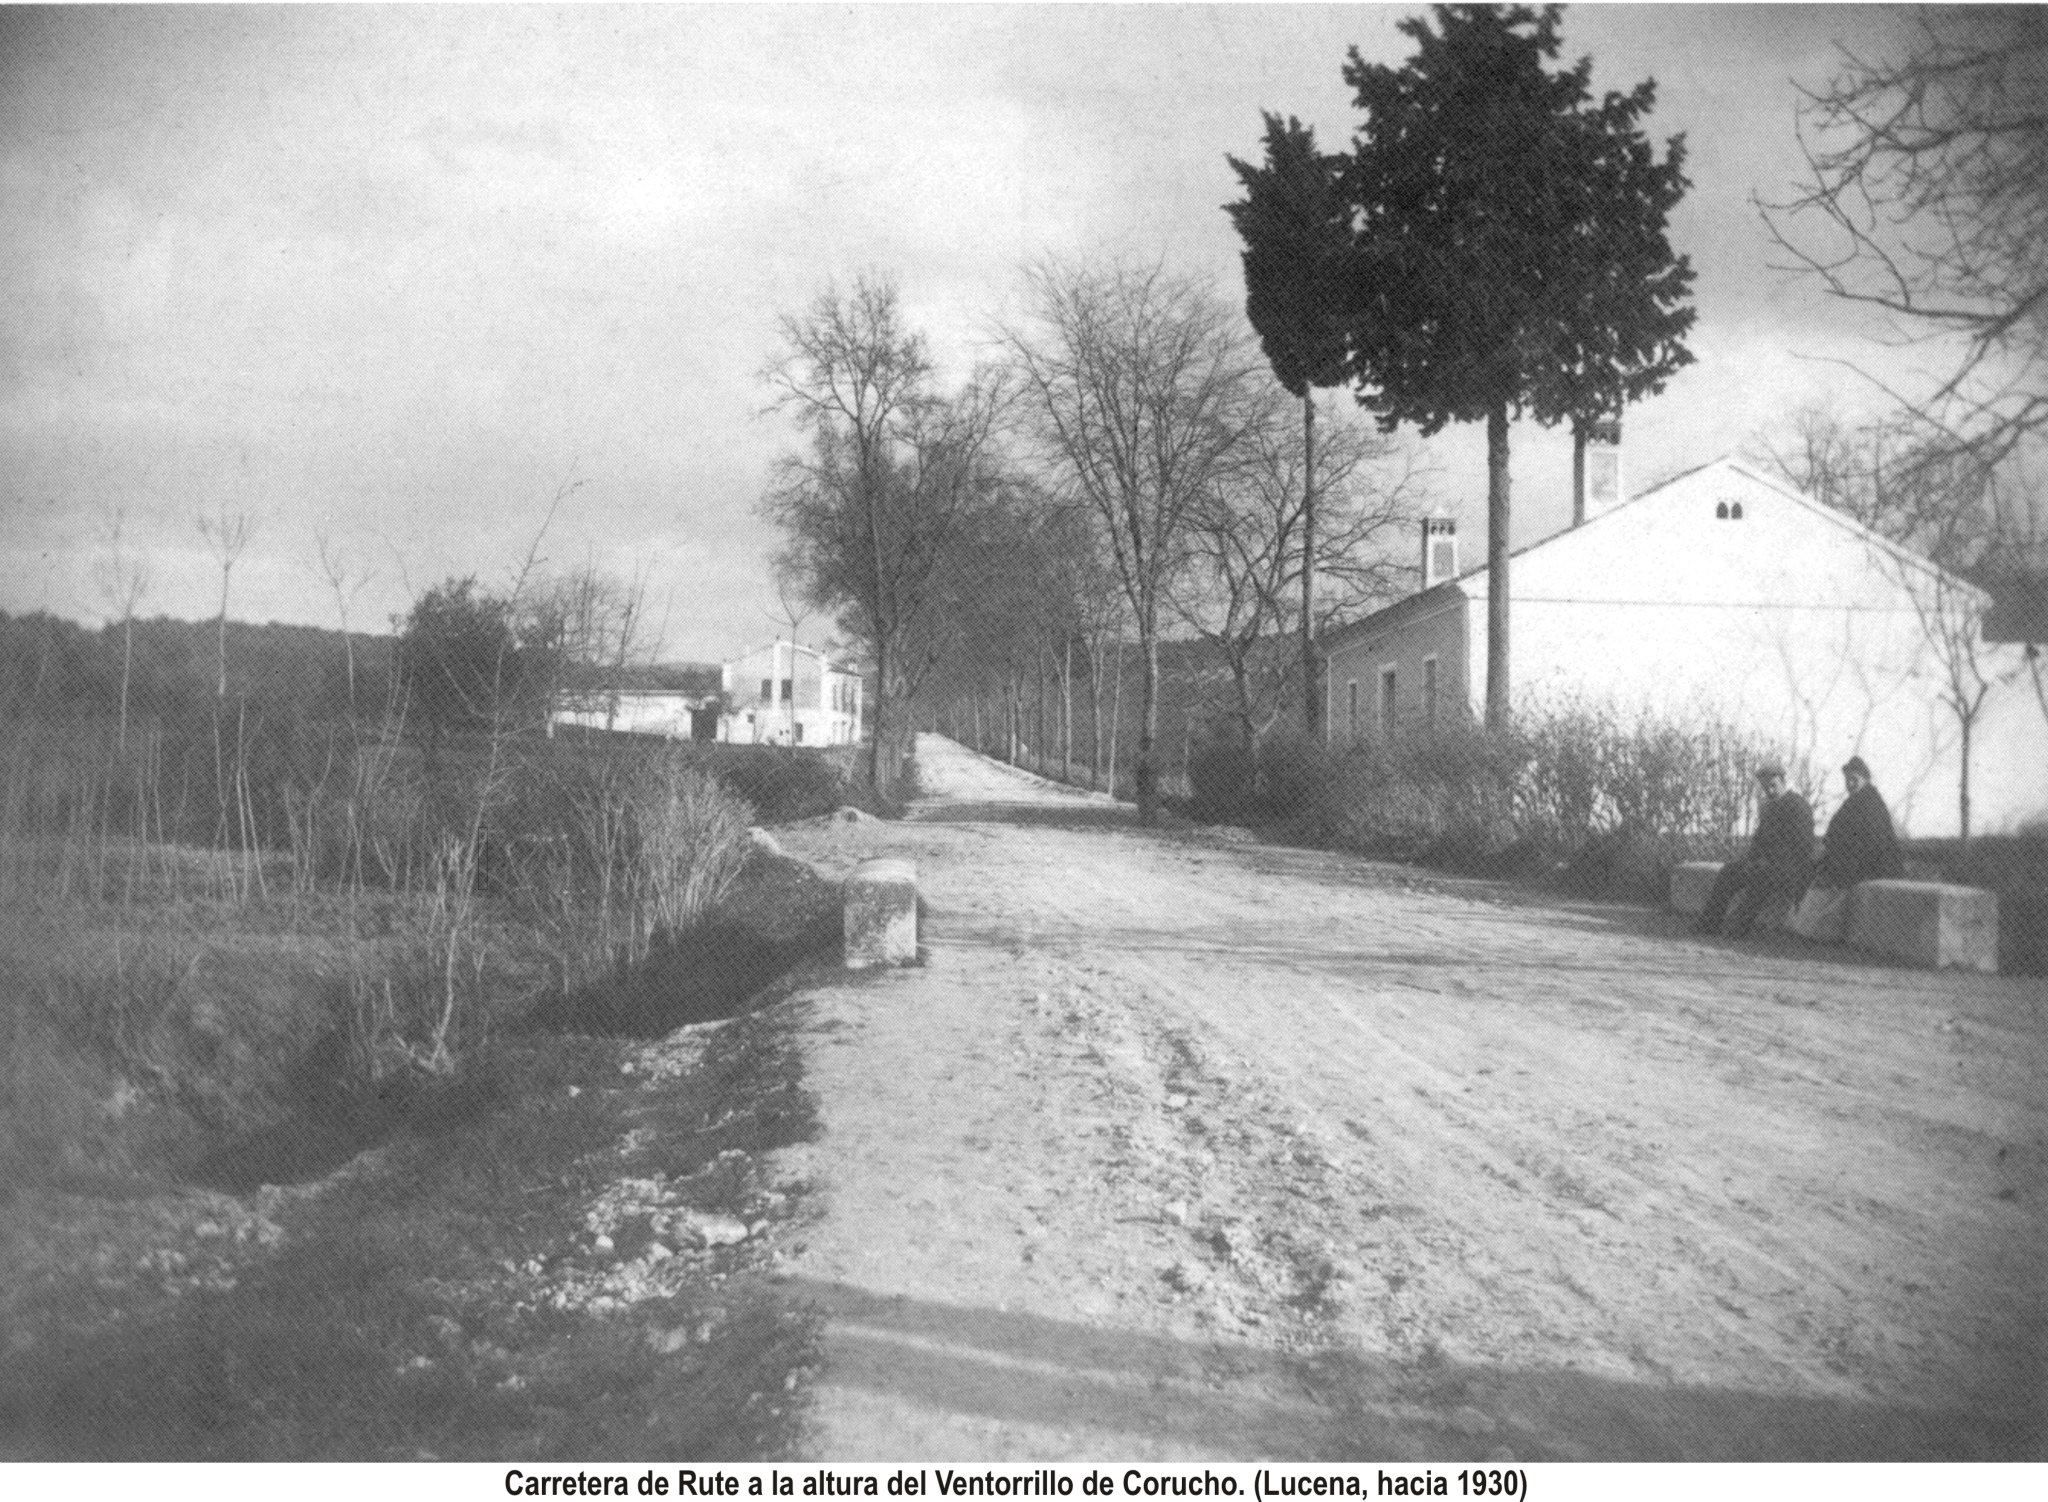 Carretera de Rute. Ventorrillo de Corucho 1930